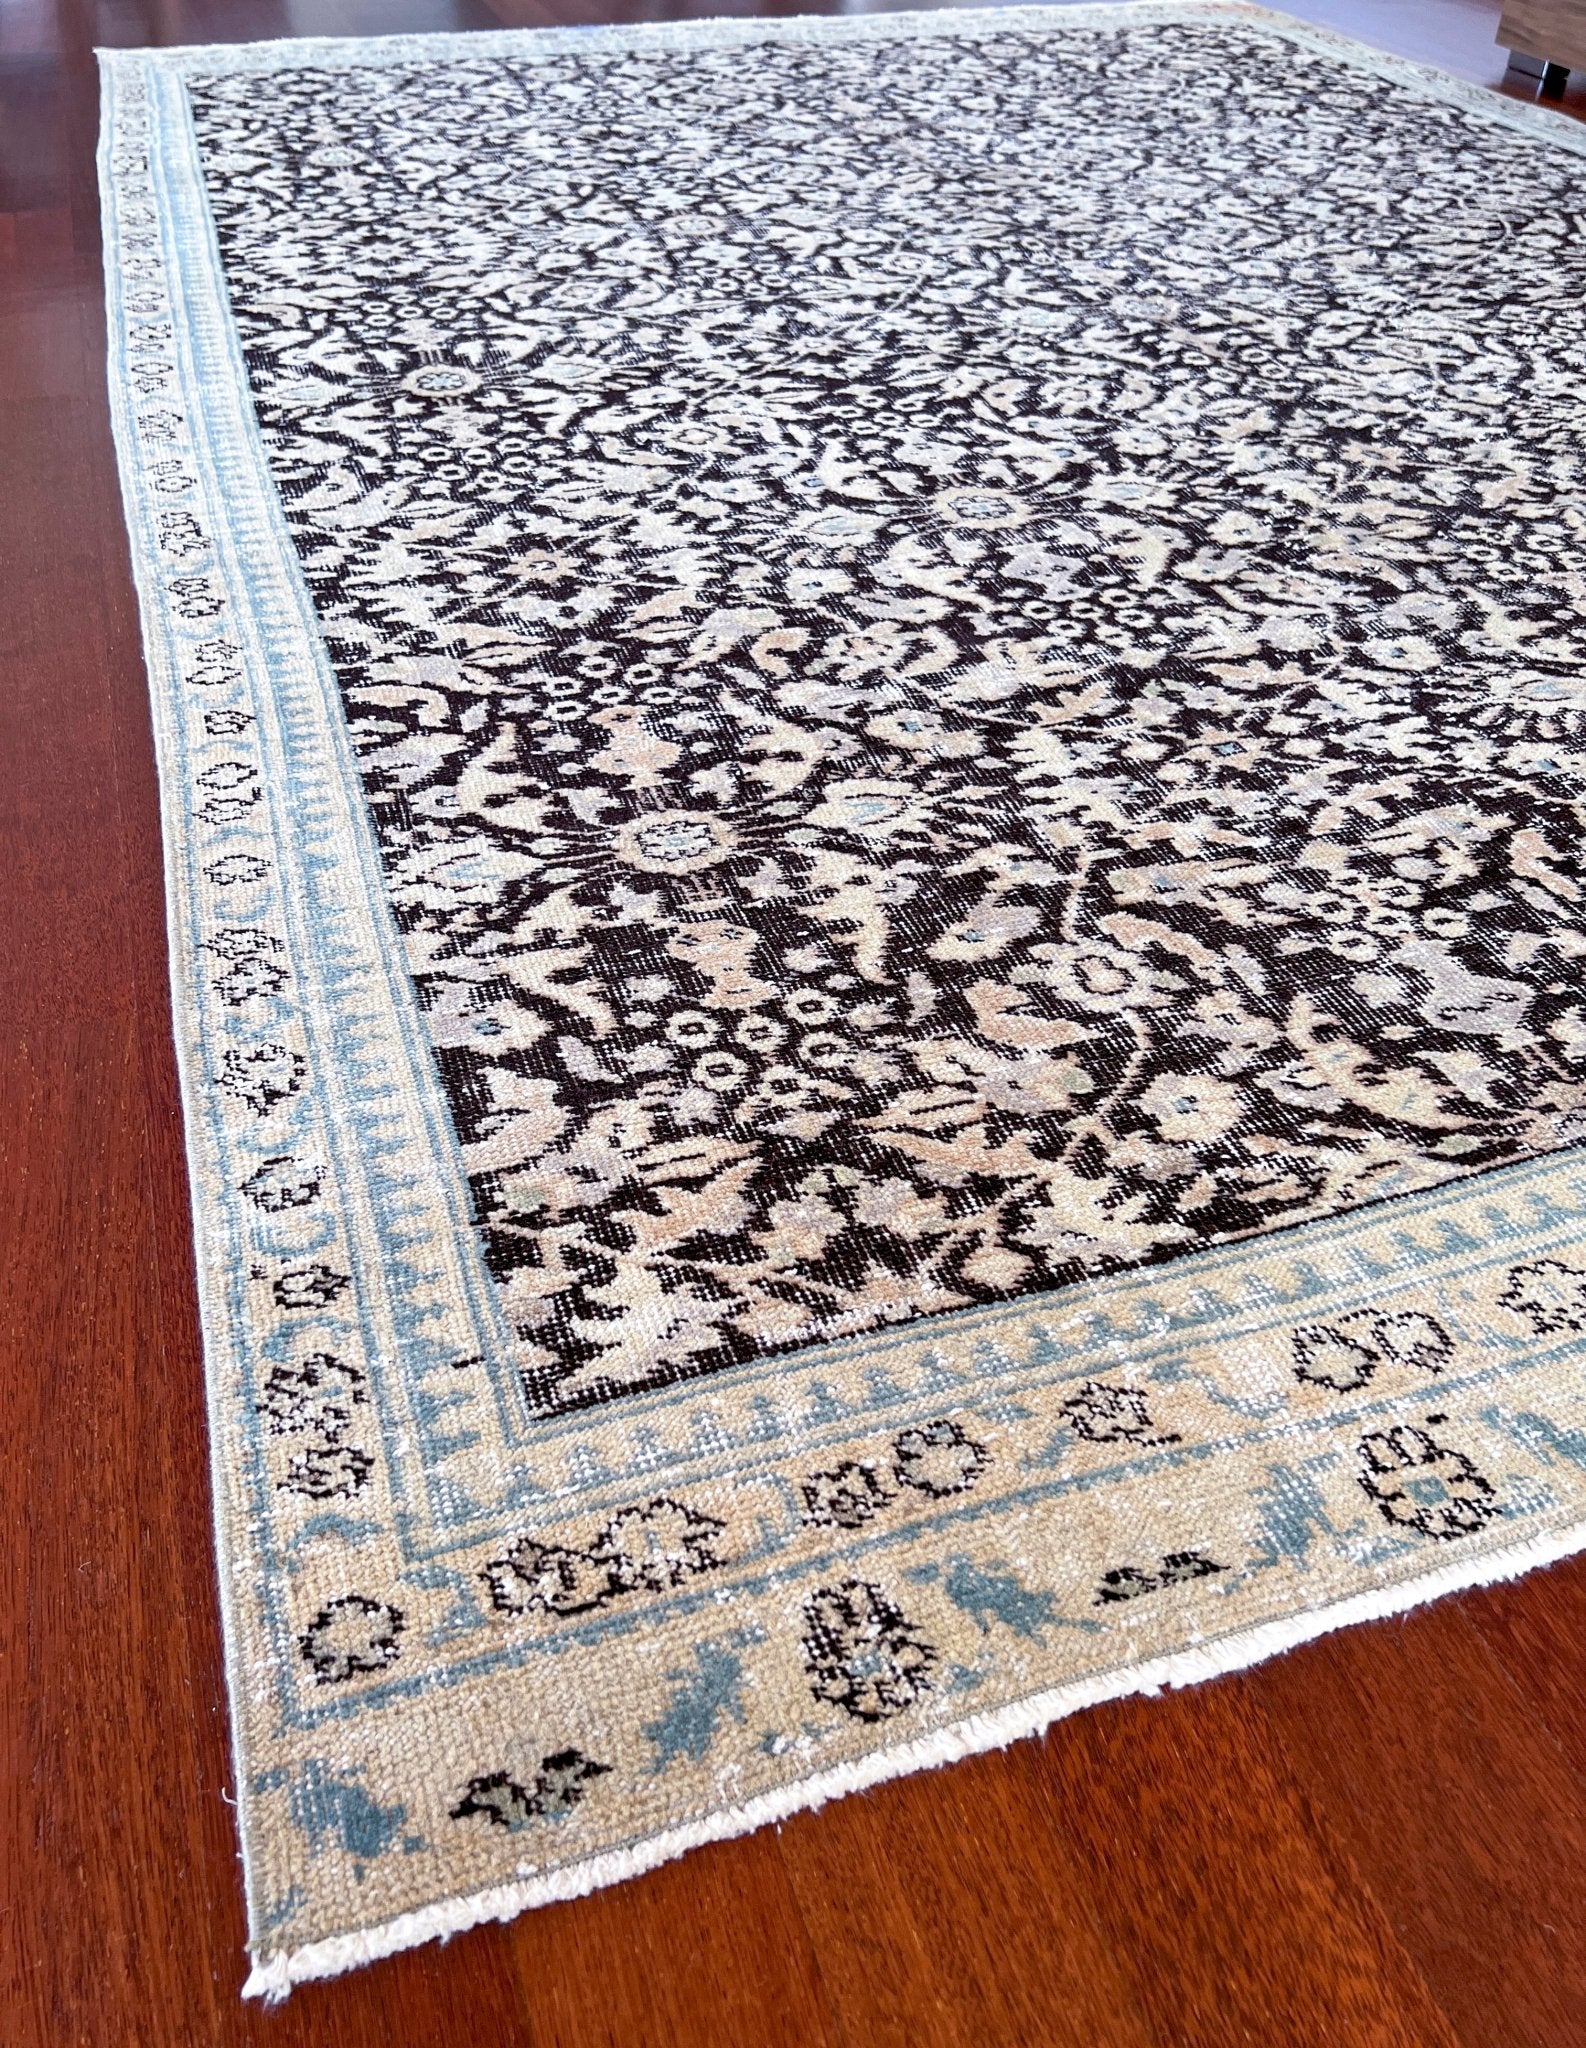 Muted floral minimalist vintage turkish rug shop san francisco bay area palo alto oriental rug shop berkeley buy rugs online